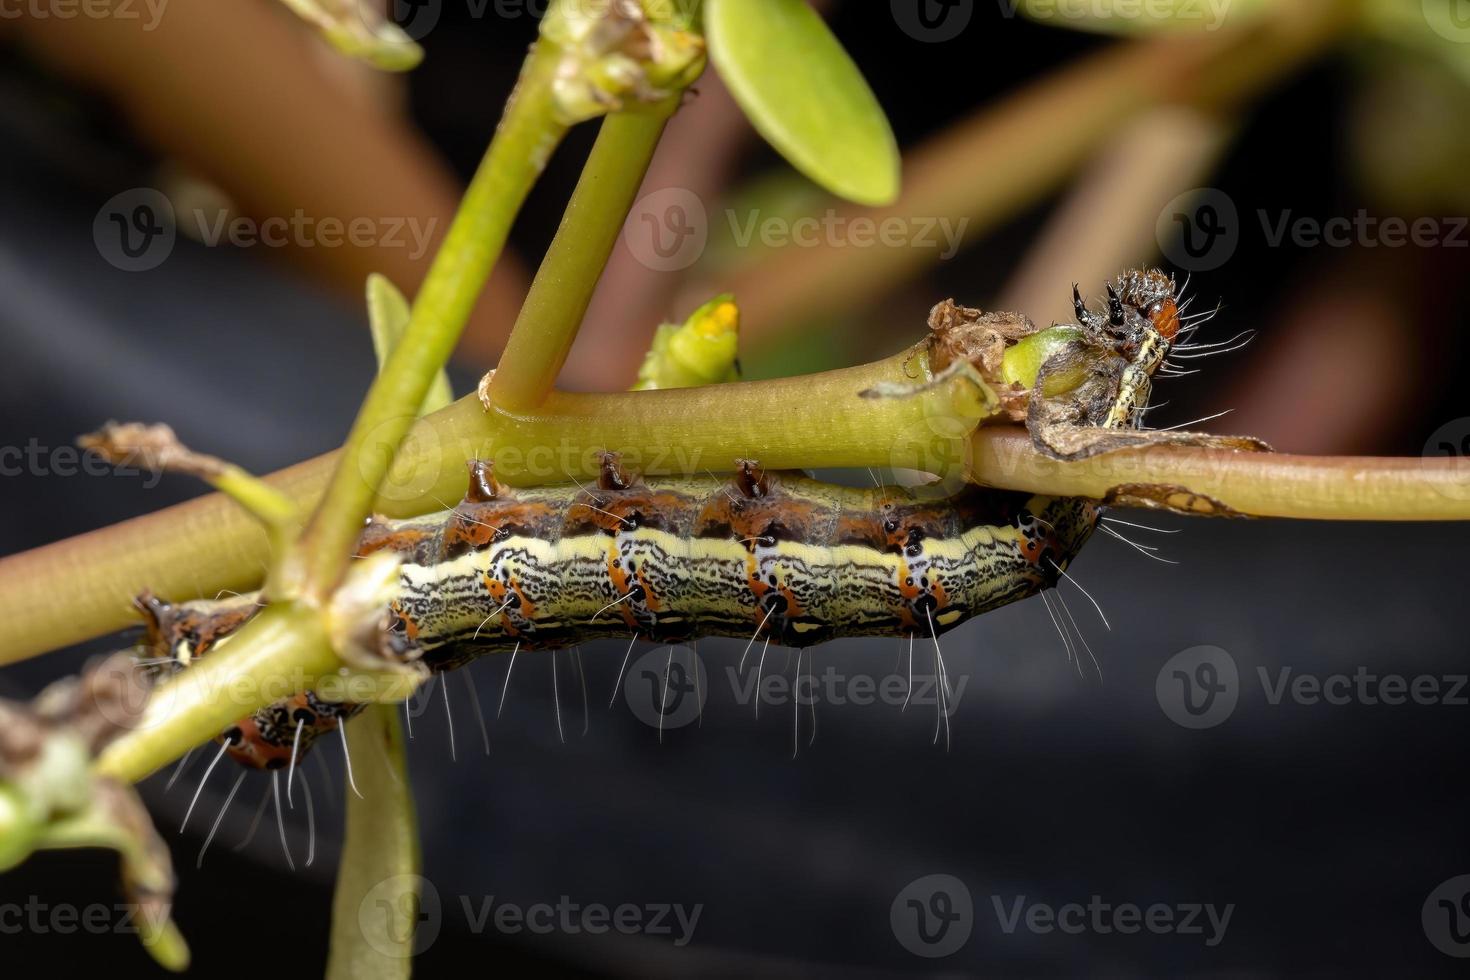 Caterpillar eating a Common Purslane plant photo